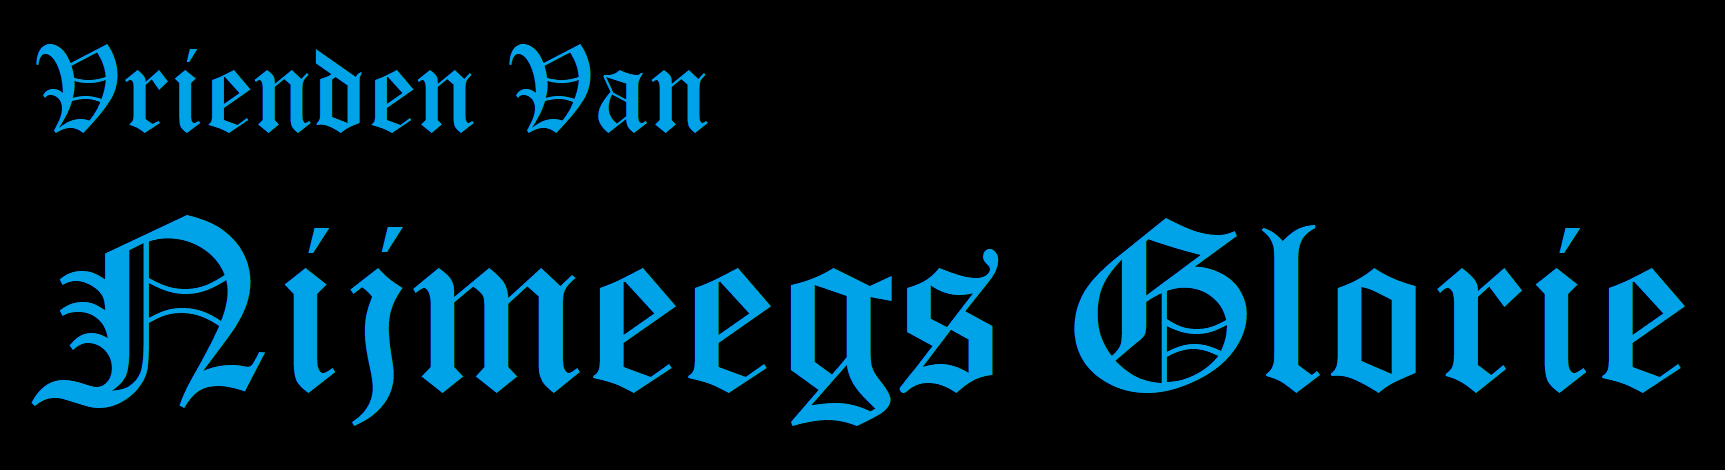 logo banner vvNG blauwe letters zwarte achtergrond